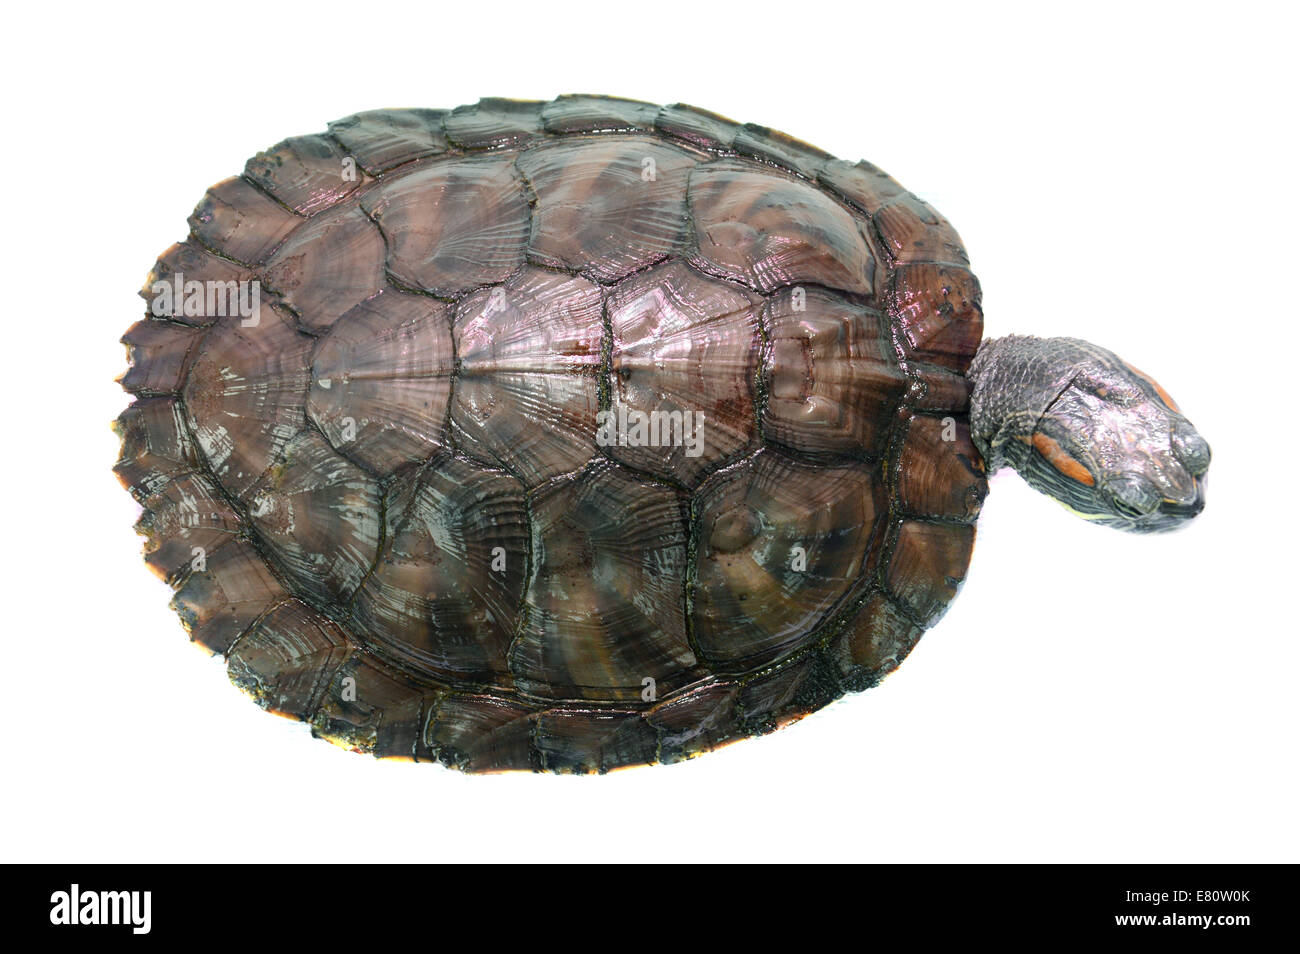 brazilian turtle Stock Photo